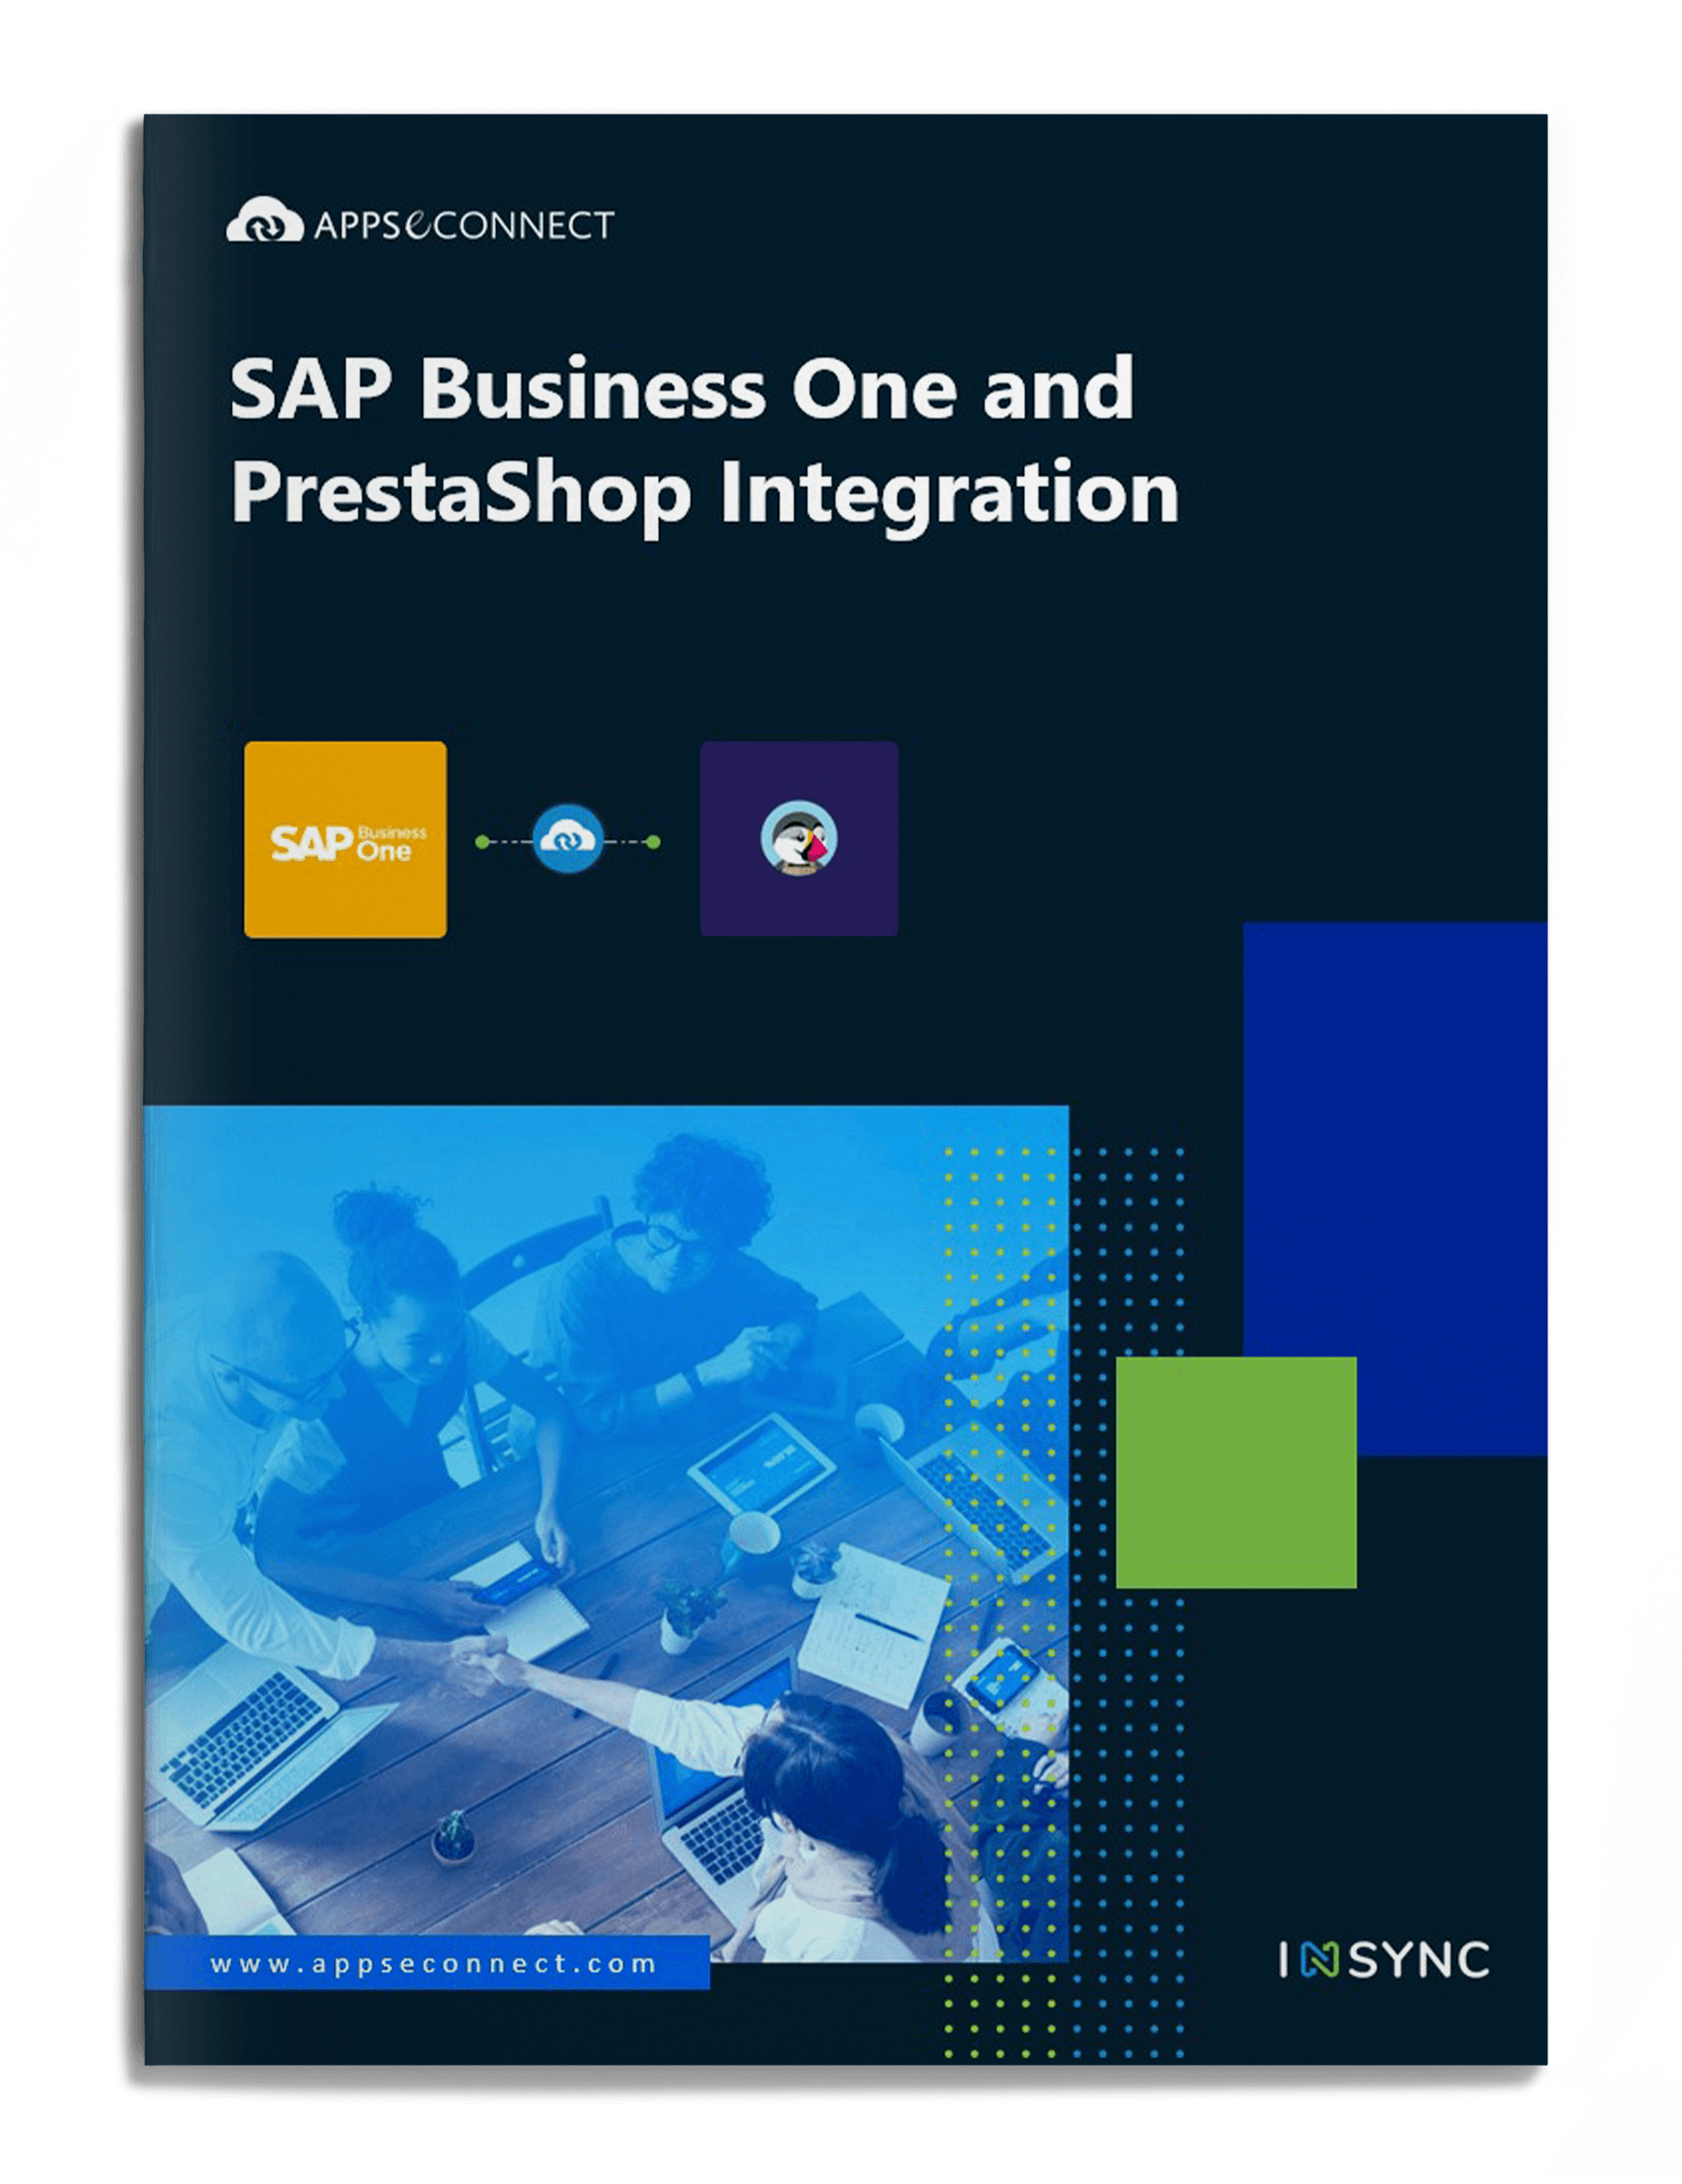 sap-business-one-prestashop-integration-brochure-cover